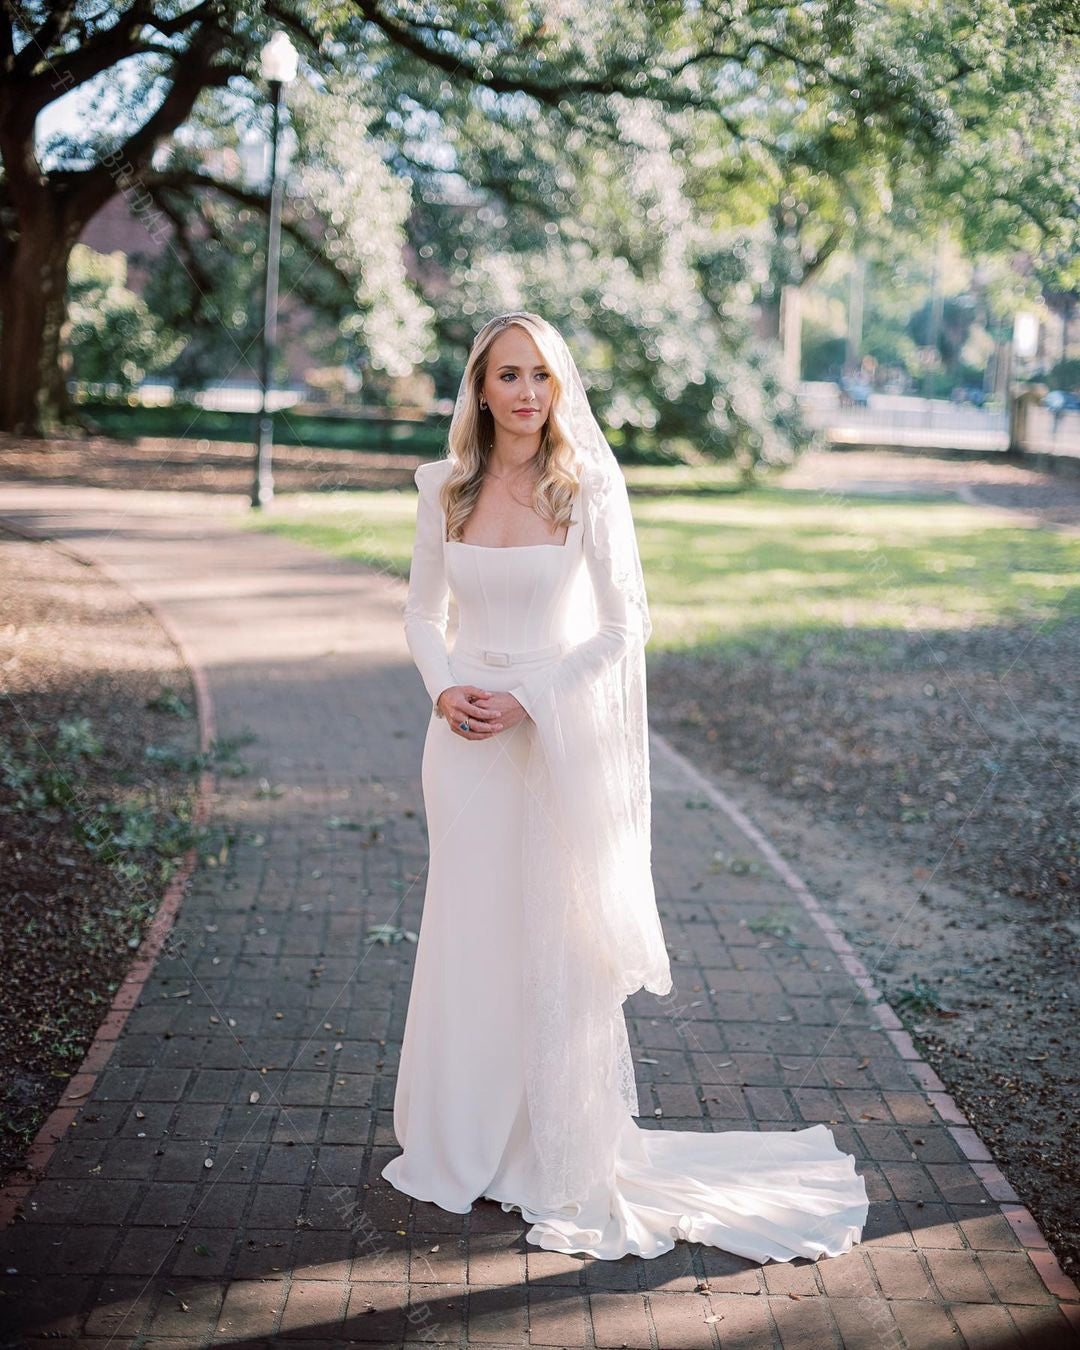 Modest Wedding Dresses: 27 Looks + FAQs